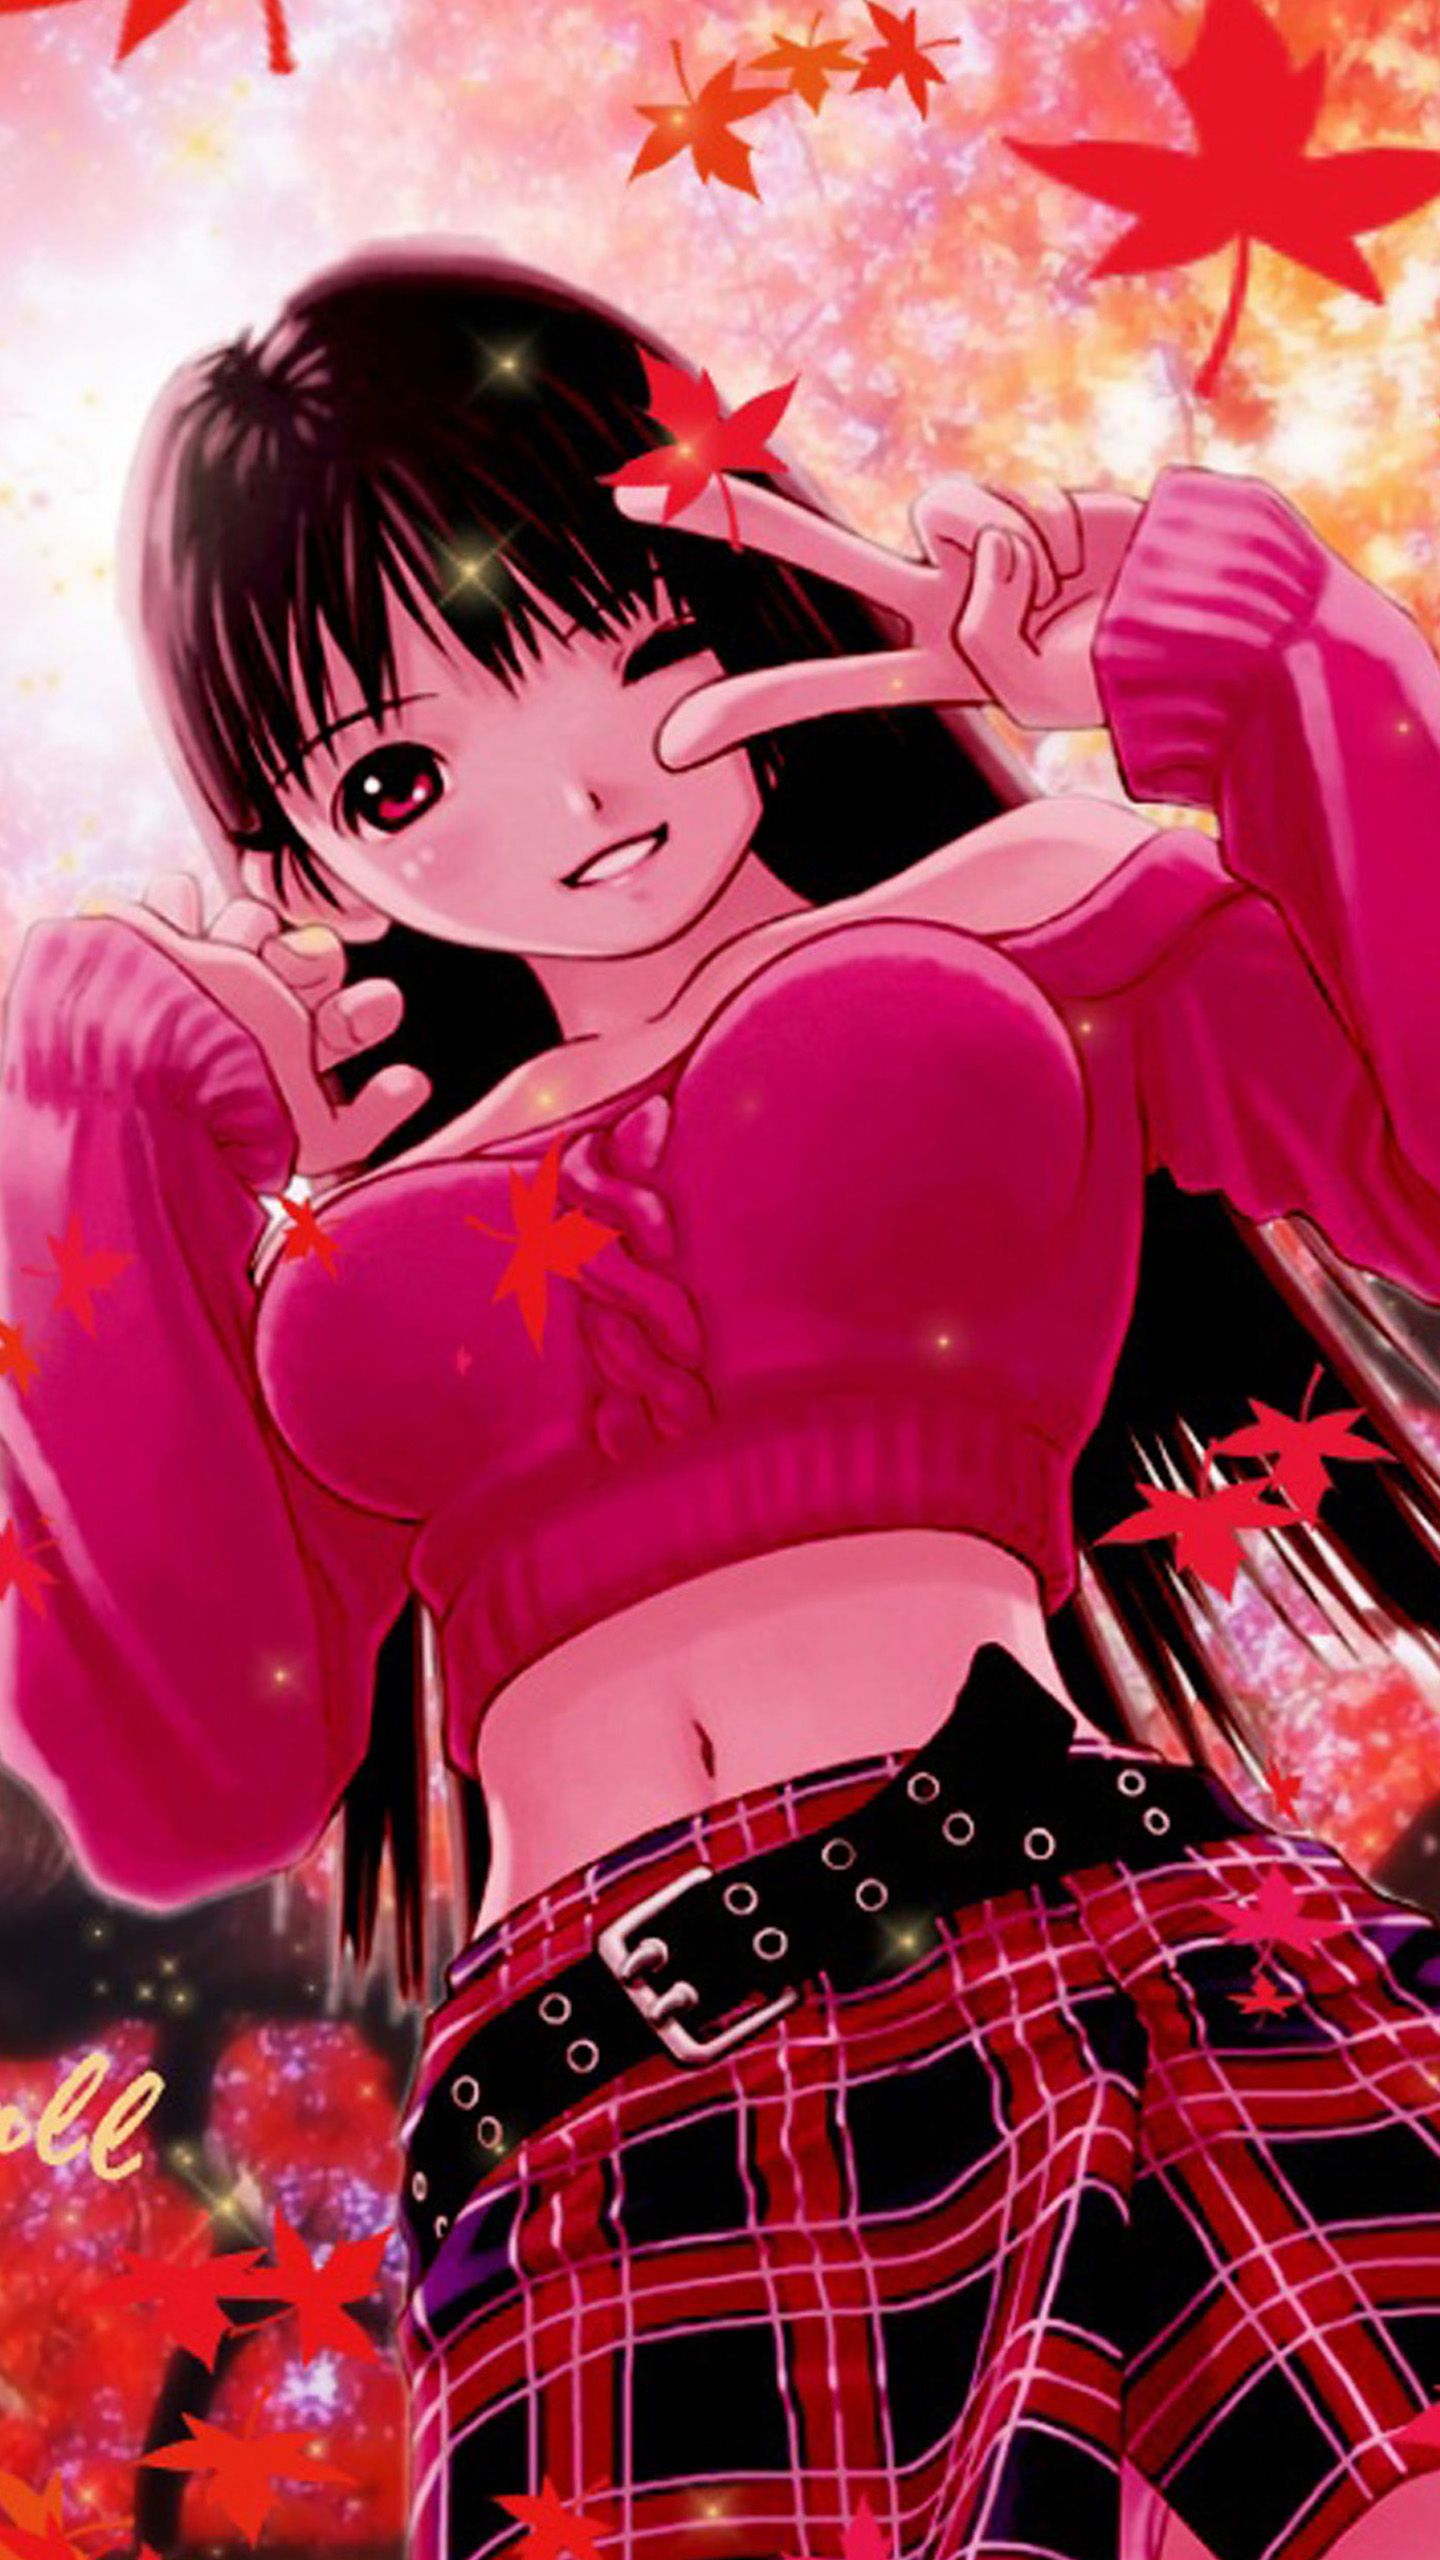 Alcatel idol 4S Wallpaper: Anime Girl Android Wallpaper